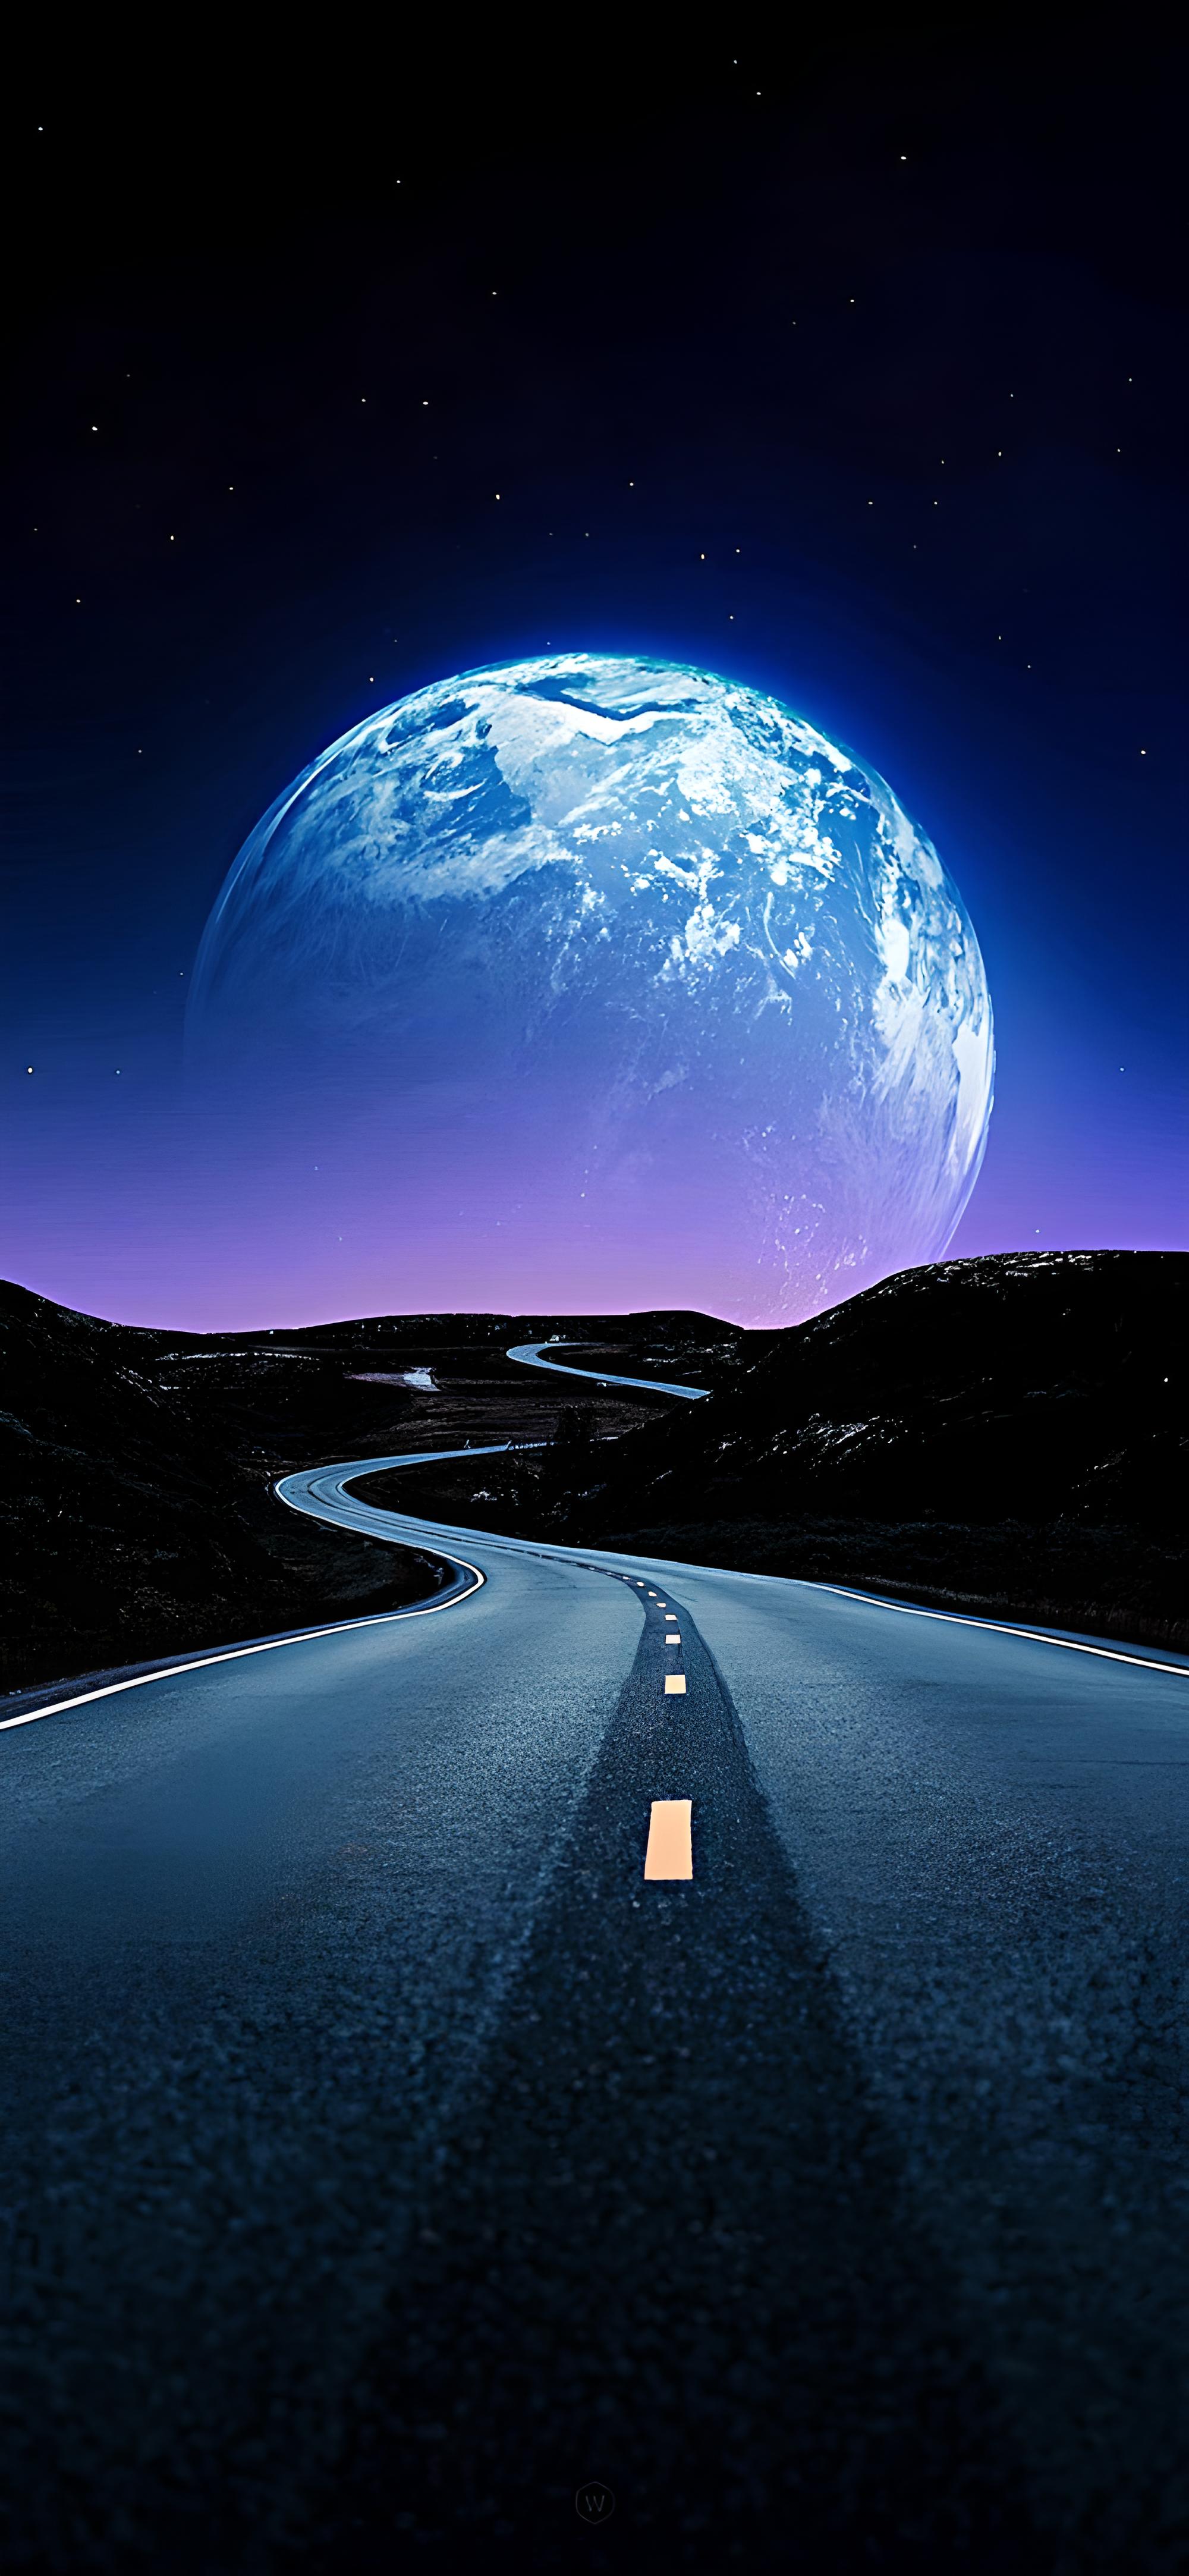 обои на телефон дорога, скачать картинку дорога, лунная планета